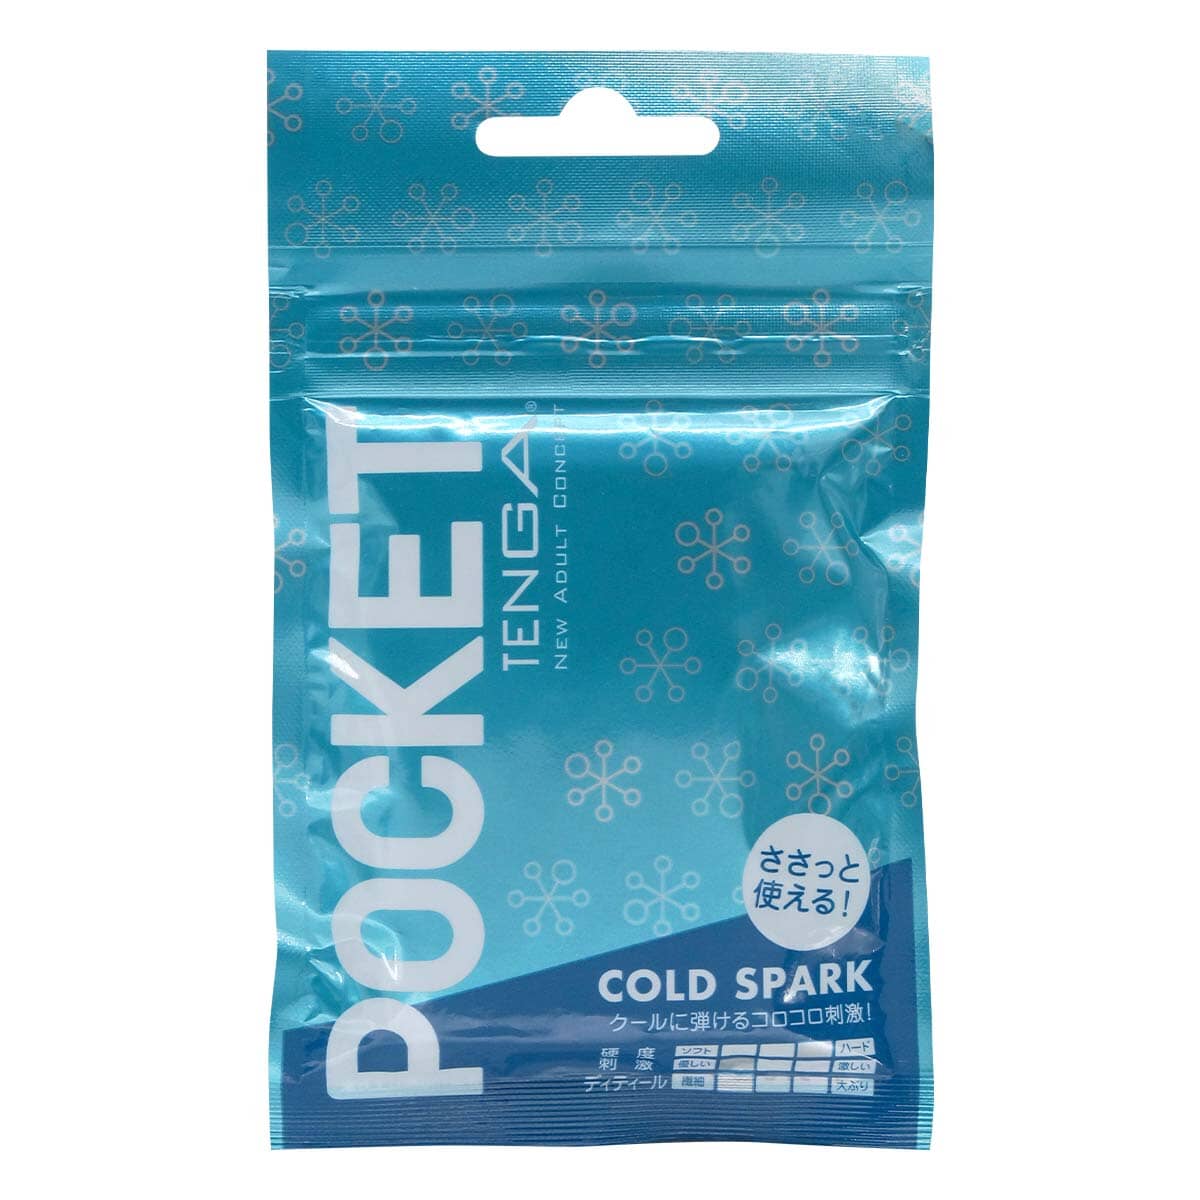 TENGA Pocket Cold Spark 清涼版 雪花紋飛機袋 購買